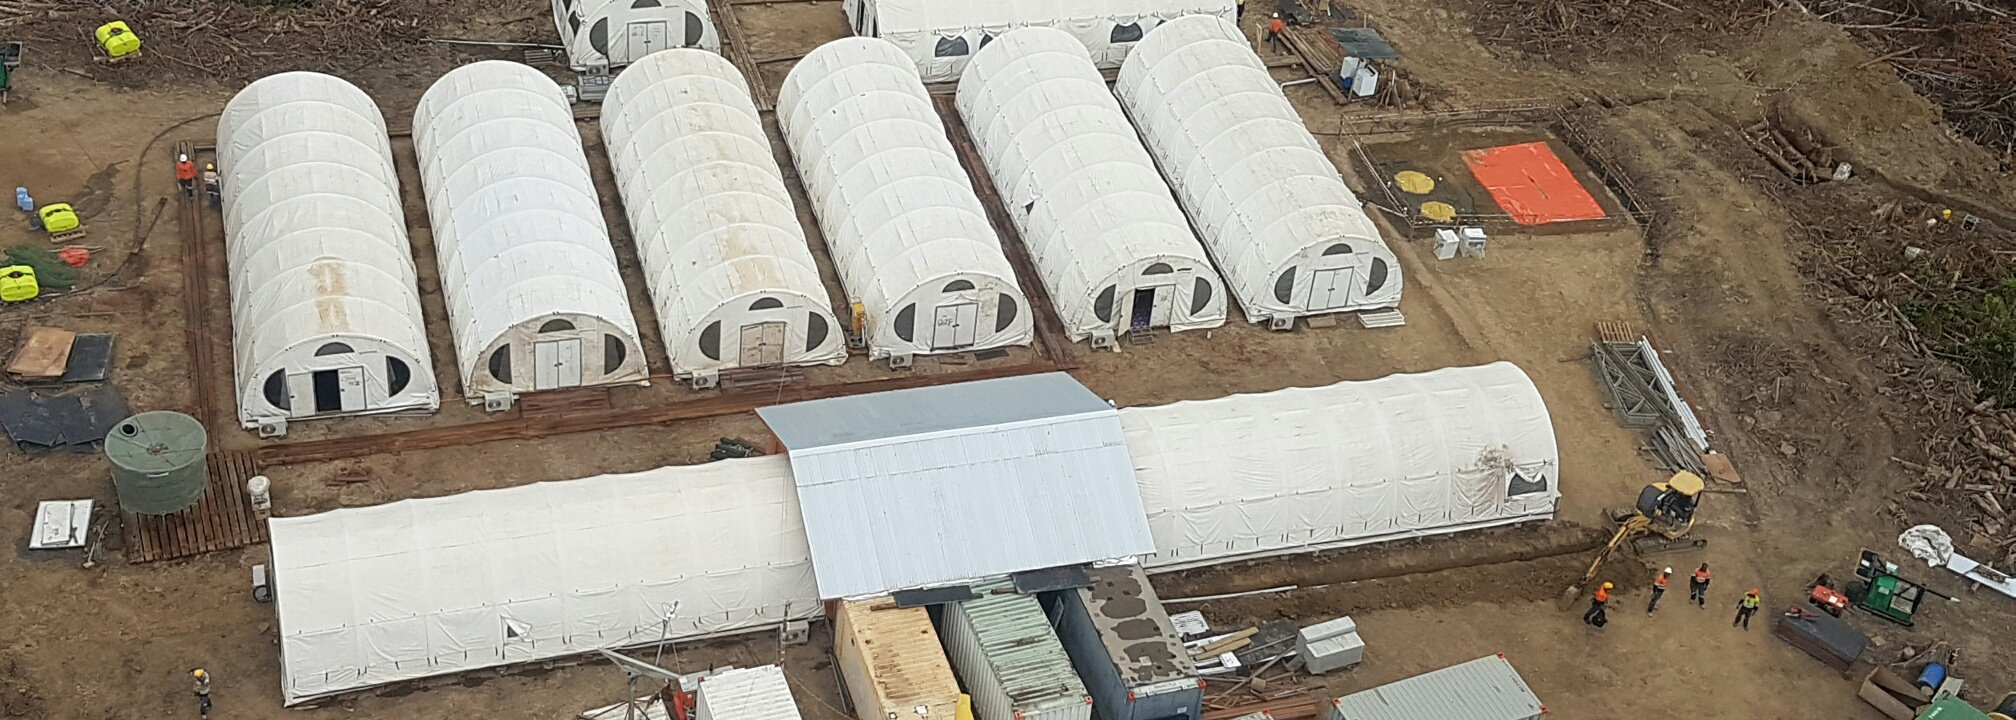 200 men camp under construction